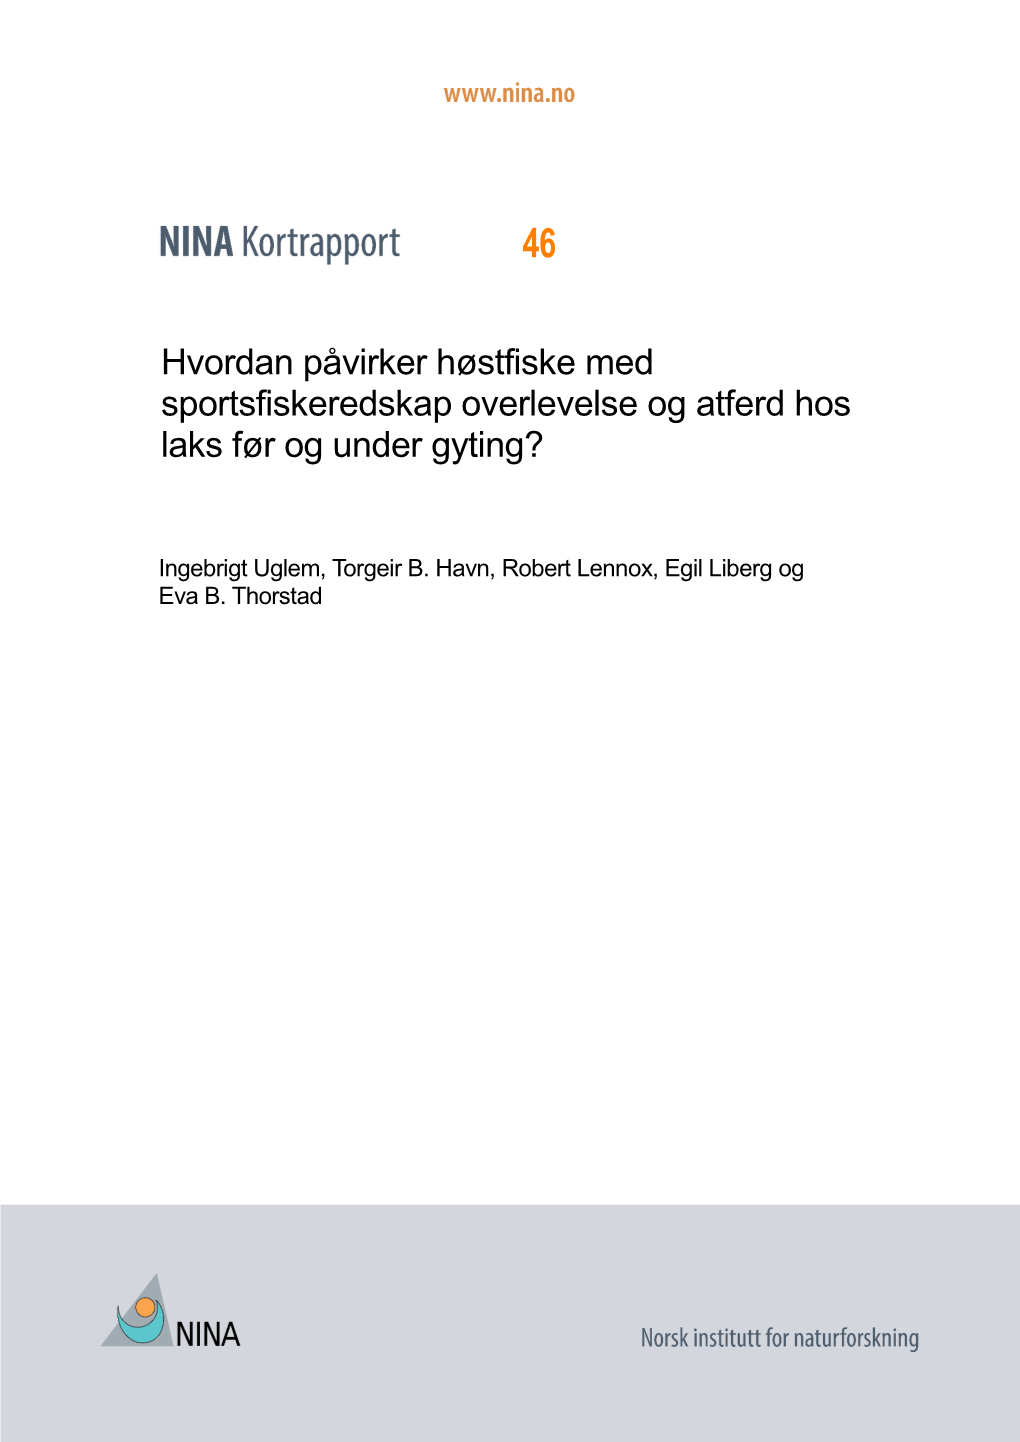 NINA Minirapport 351: 17 S